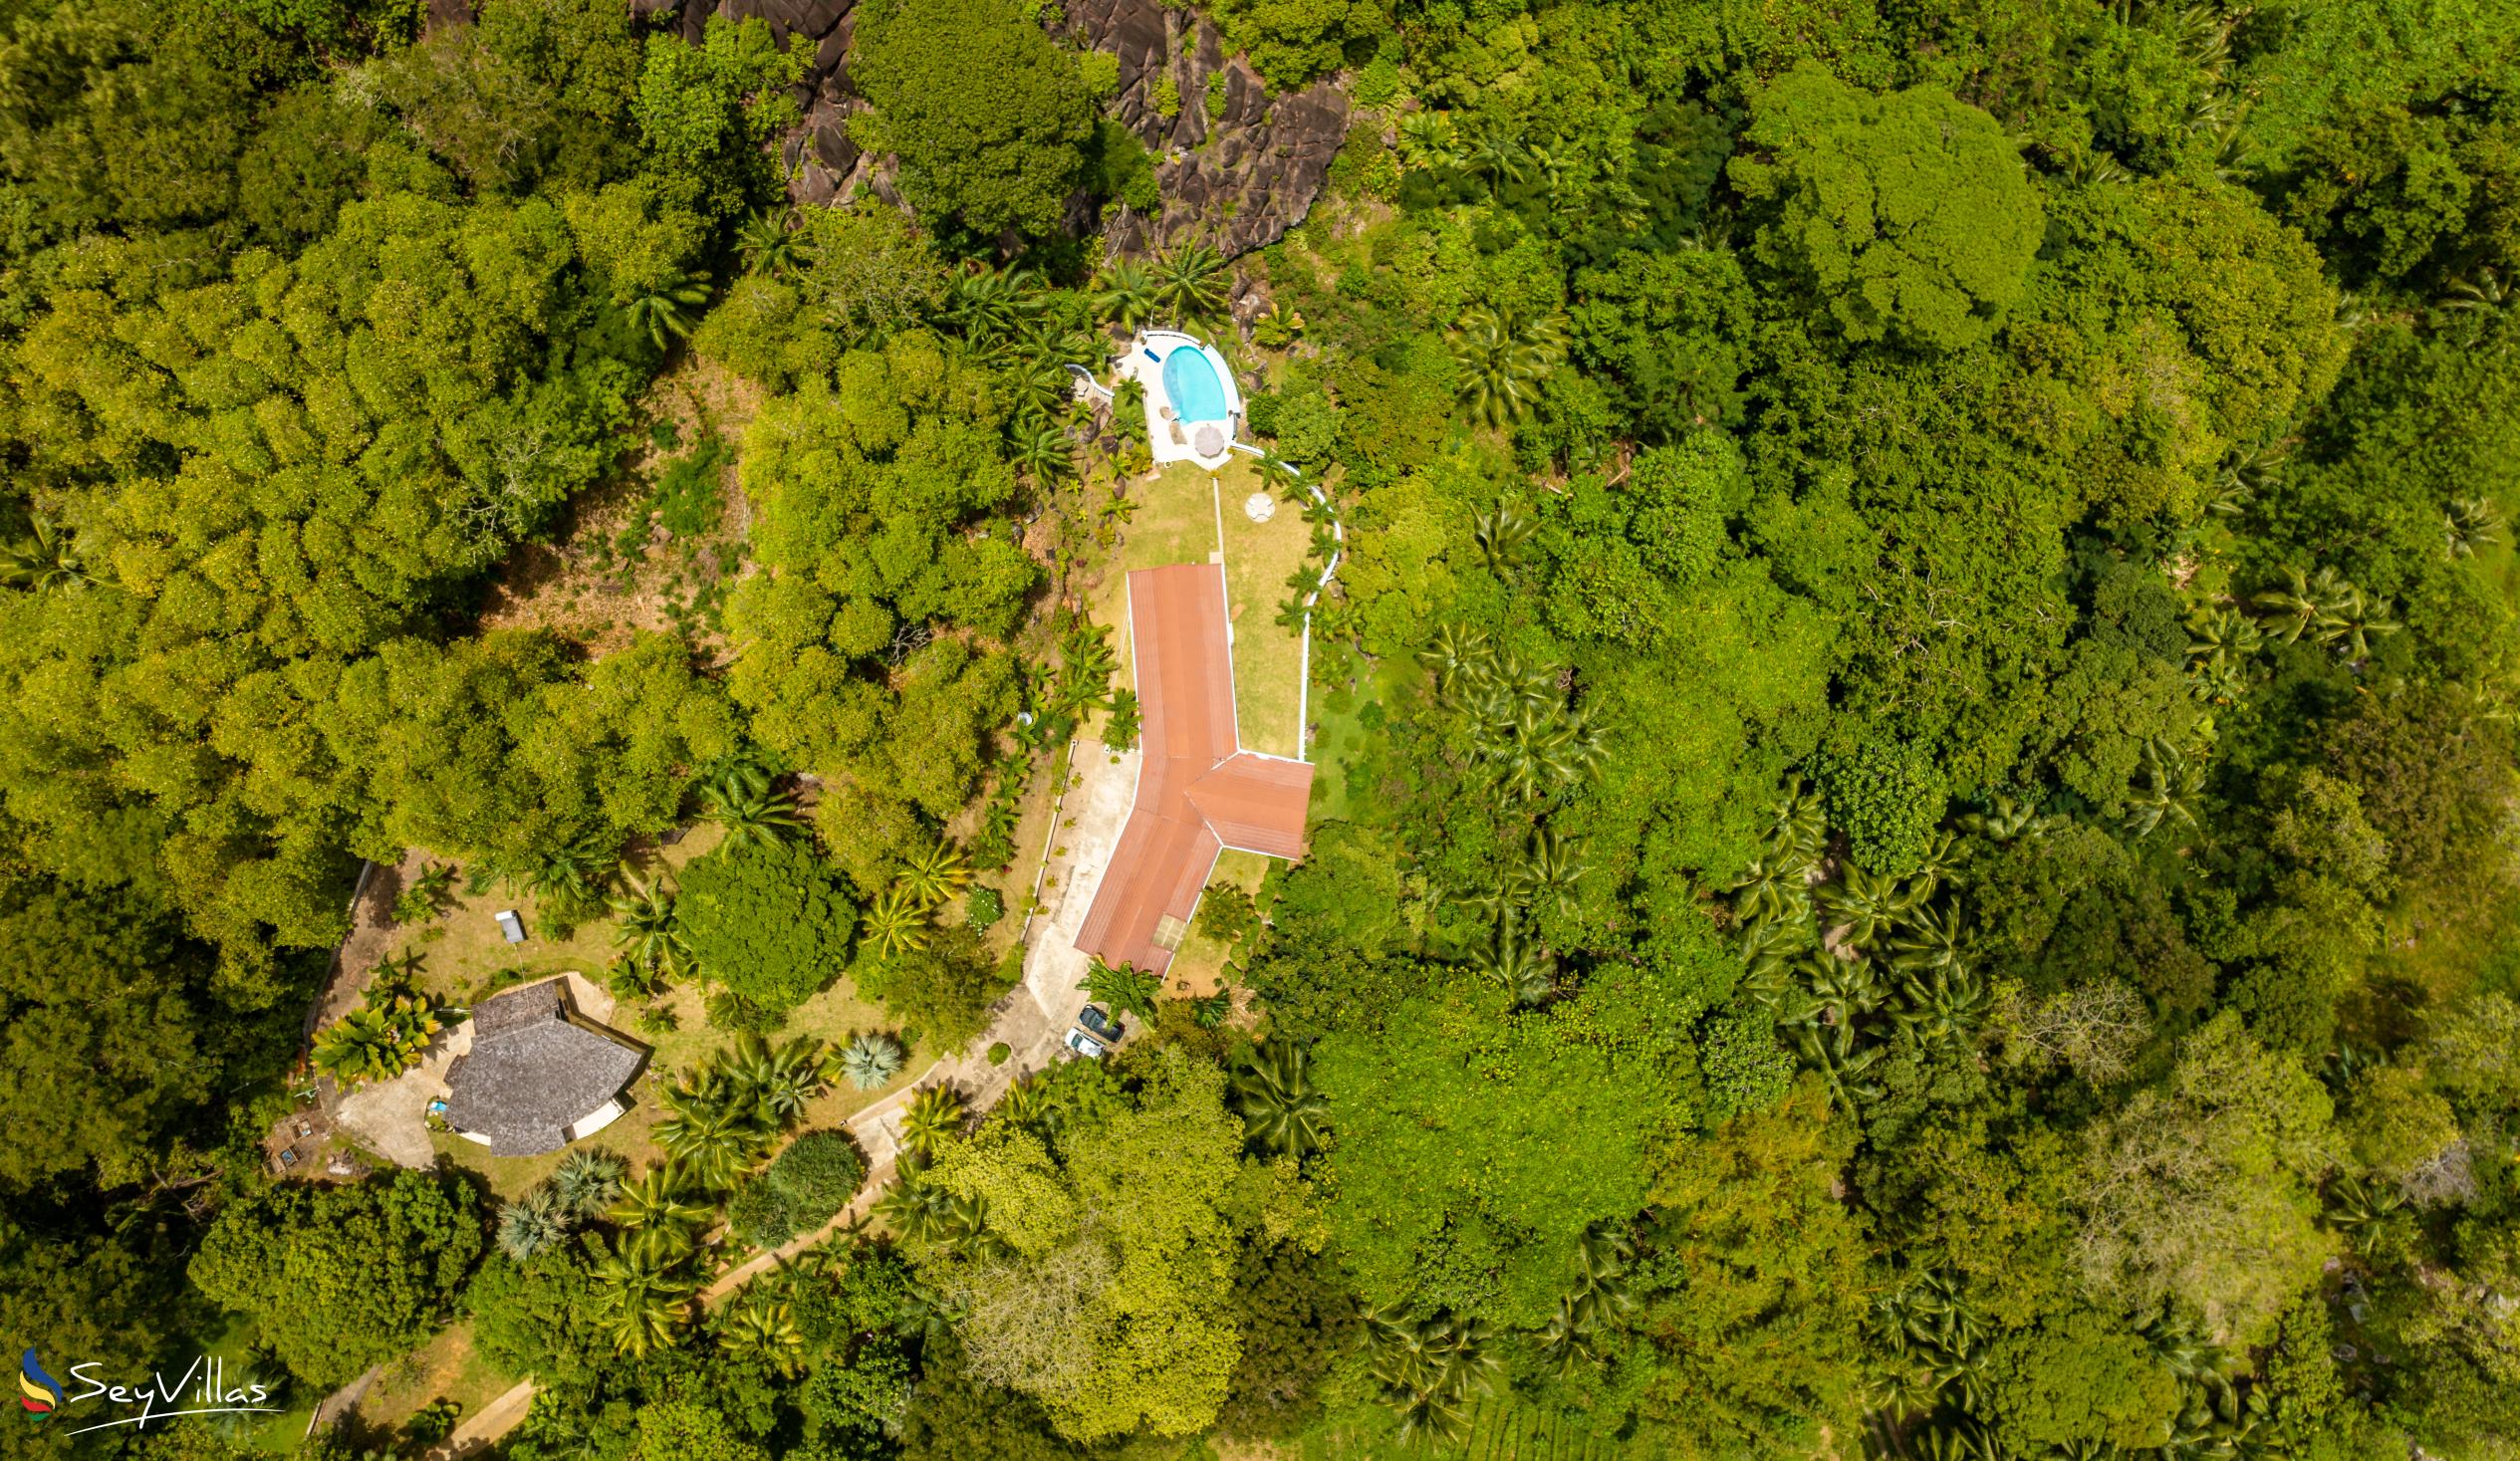 Foto 9: Villa Gazebo - Aussenbereich - Mahé (Seychellen)